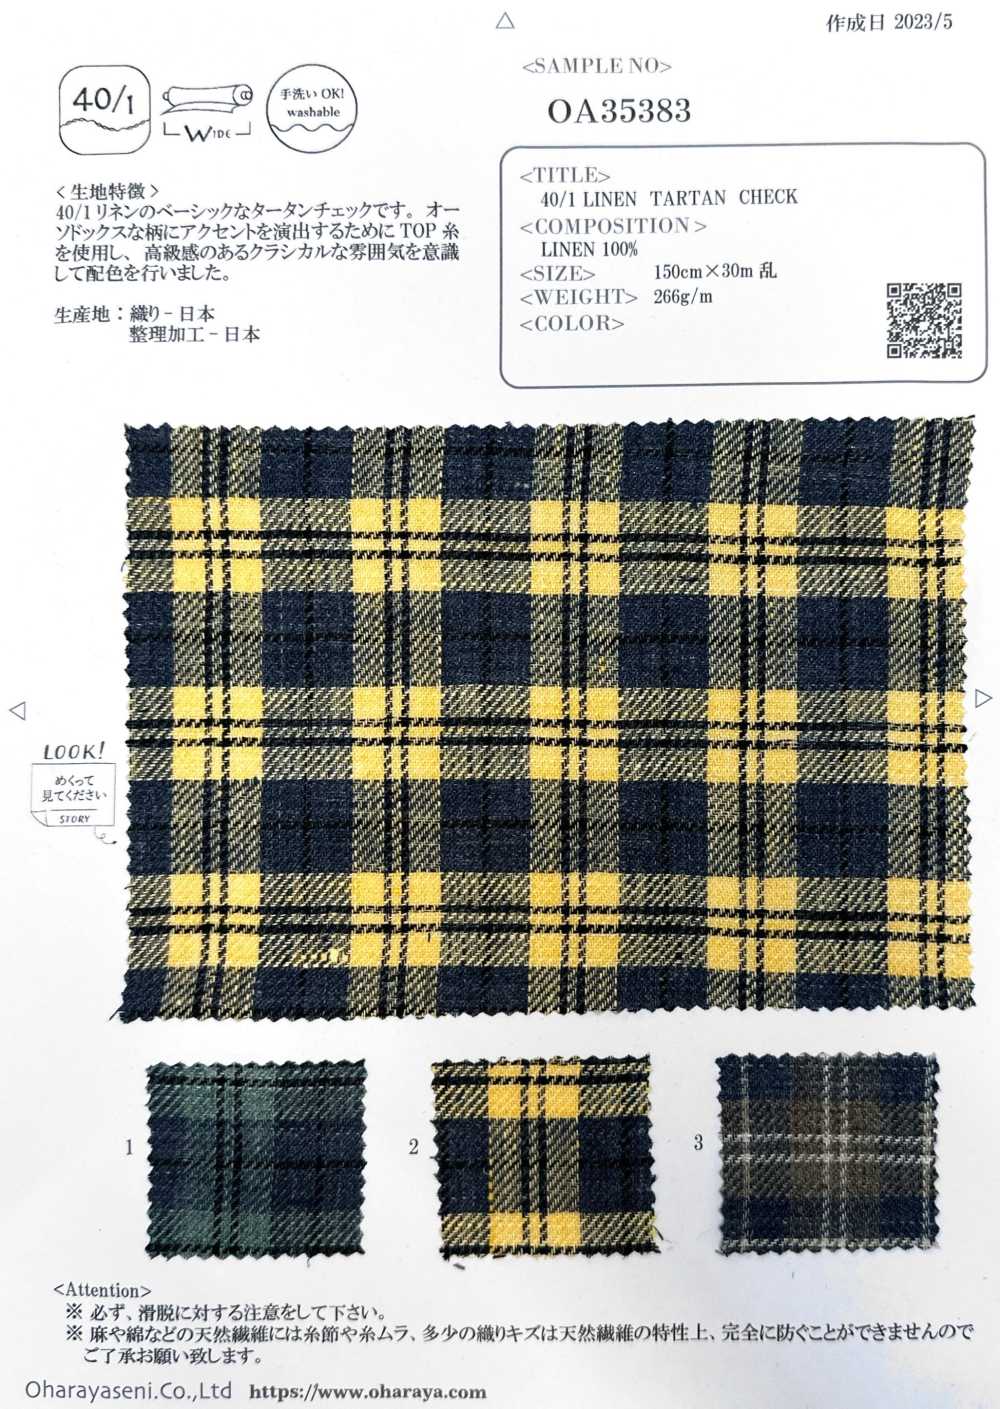 OA35383 40/1 LINO CUADROS TARTÁN[Fabrica Textil] Oharayaseni